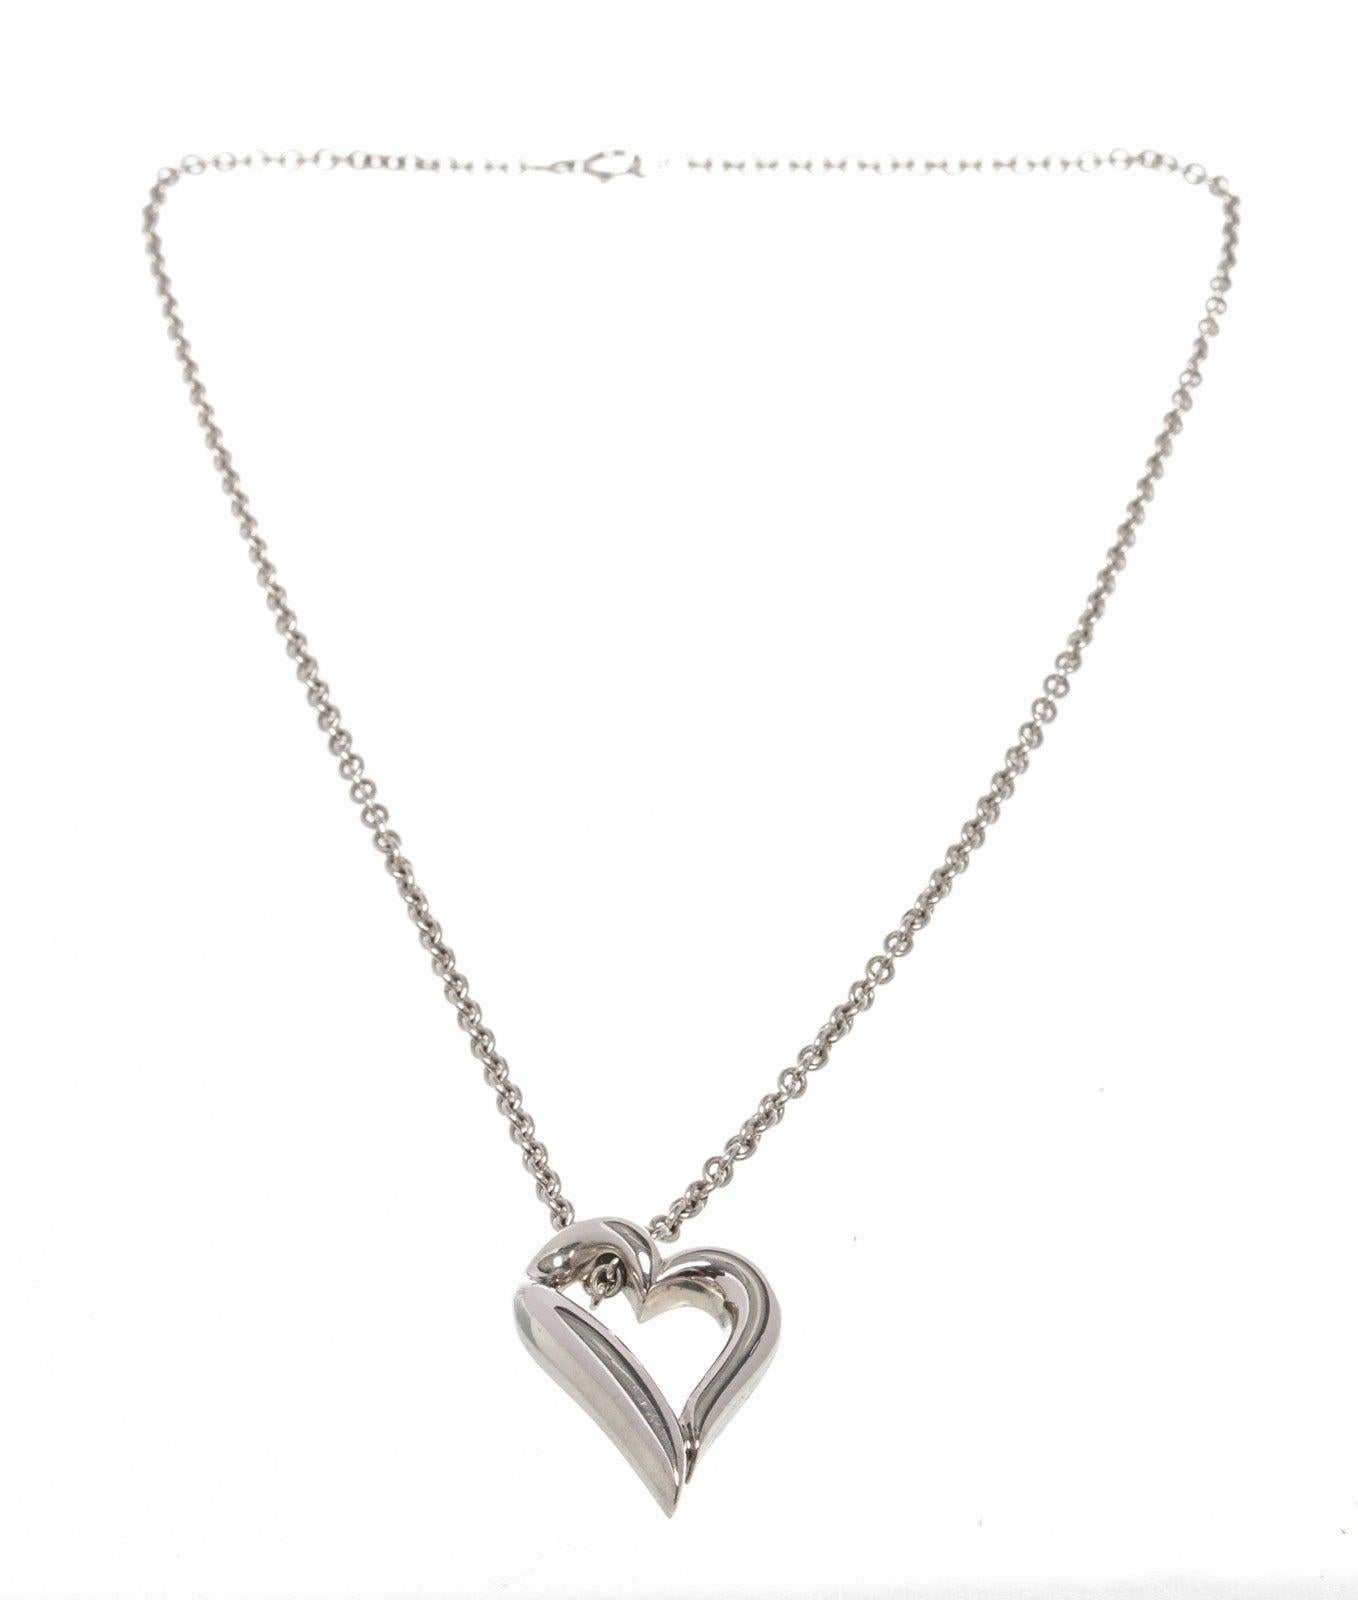 Boucheron Silver Heart Pendant Necklace with silver-tone hardware.

50025MSC